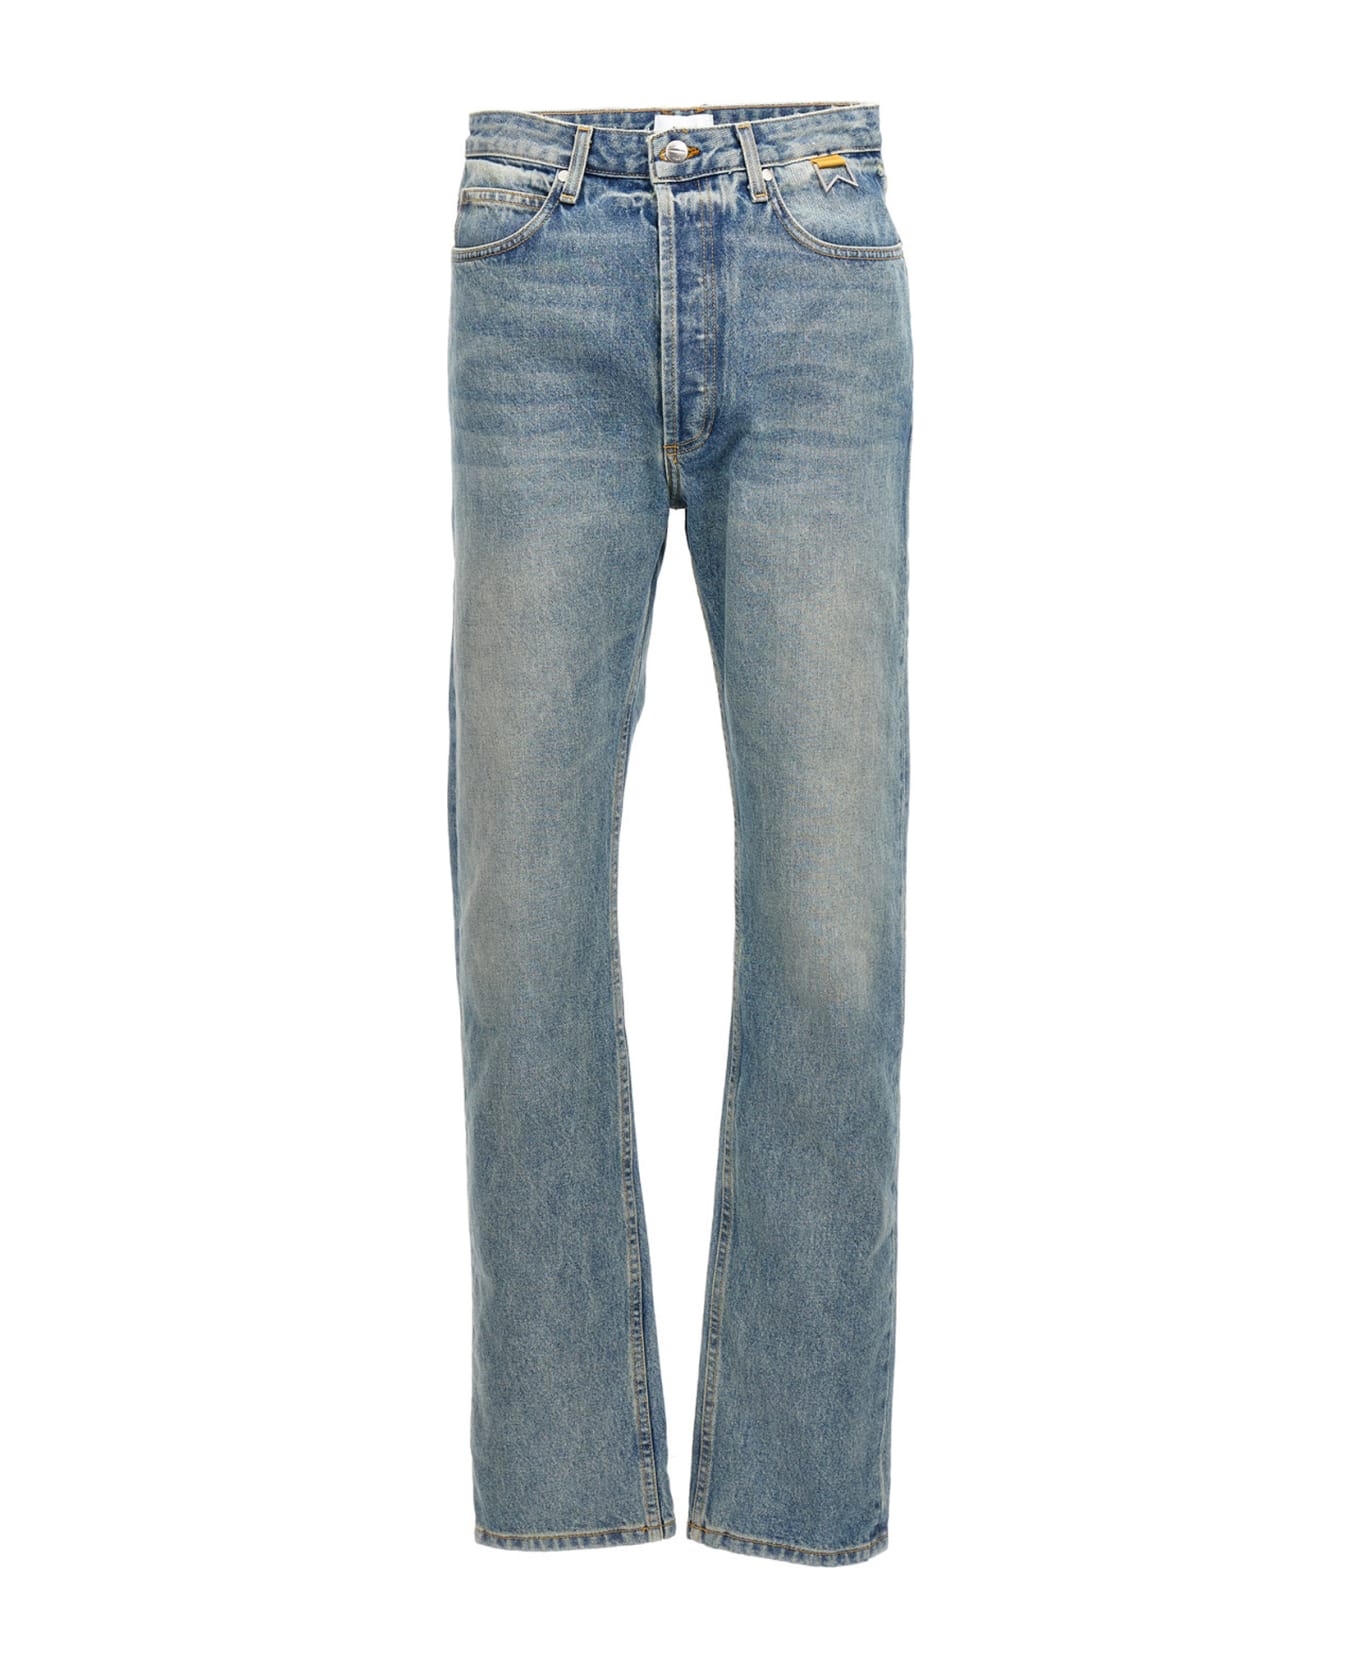 Rhude Jeans 'denim Classic' - Light Blue